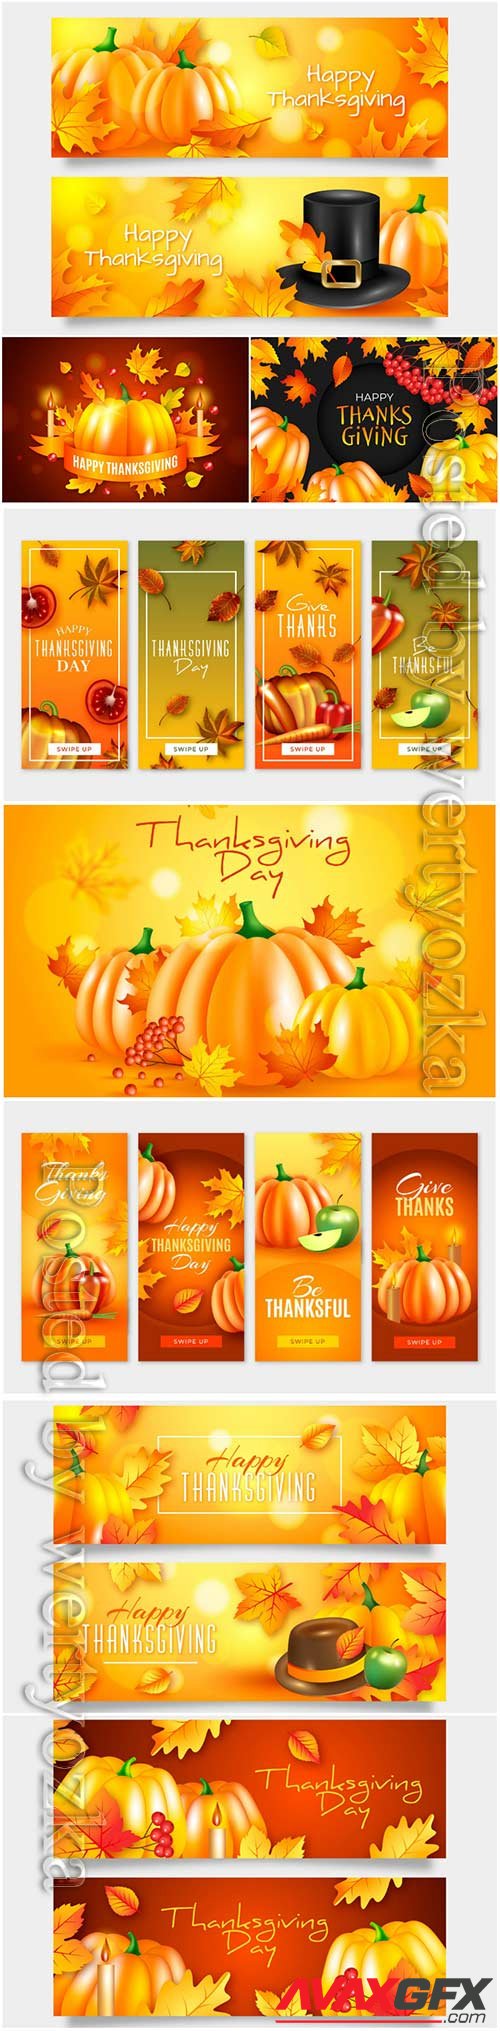 Thanksgiving day banner design